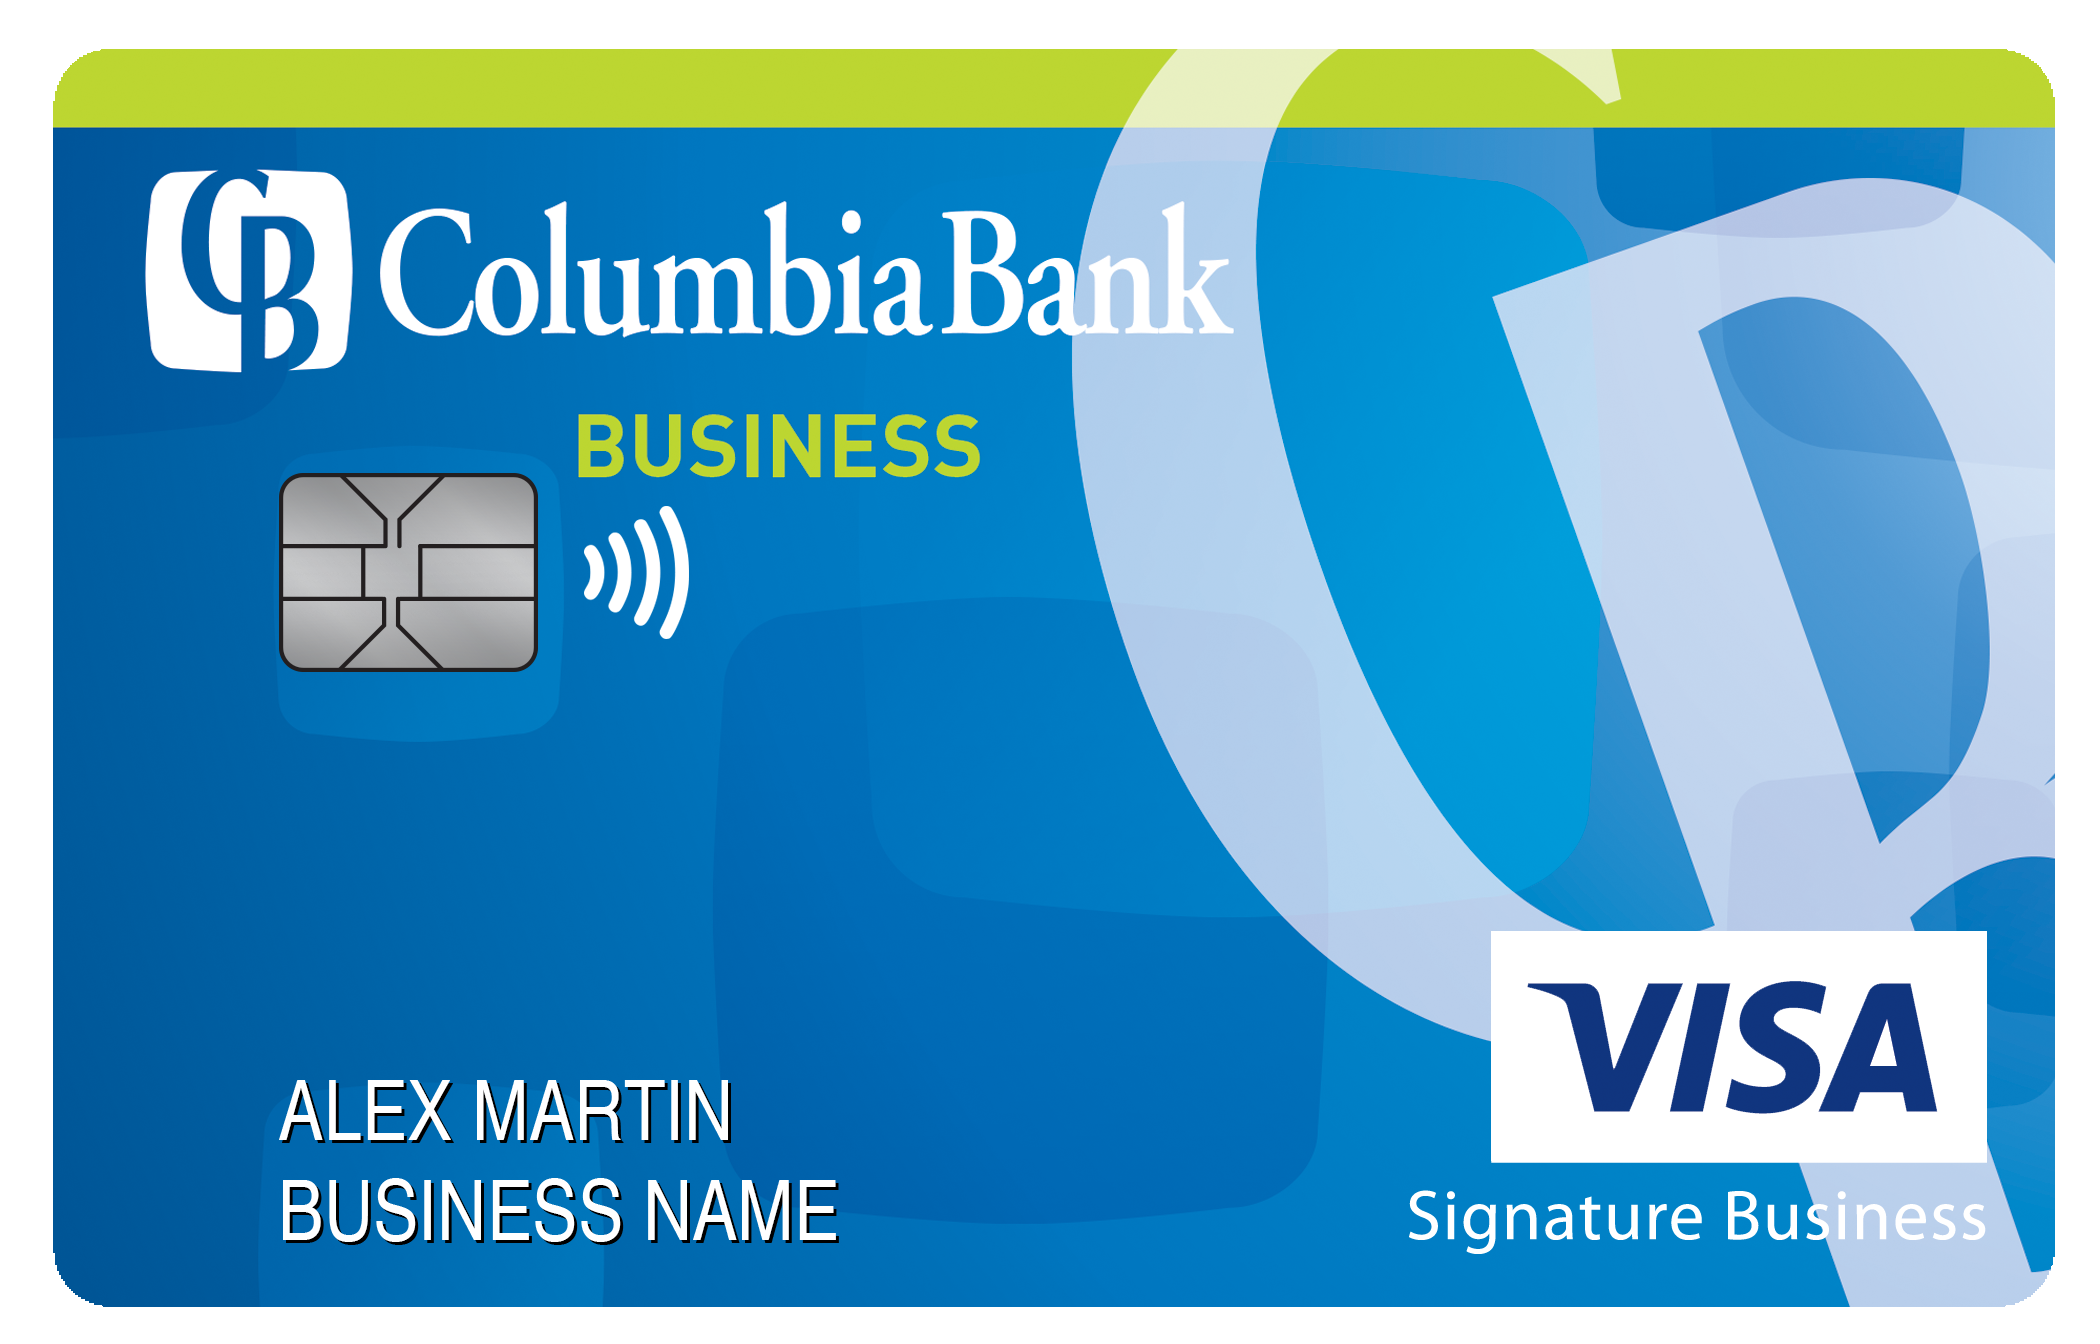 Columbia Bank Smart Business Rewards Card